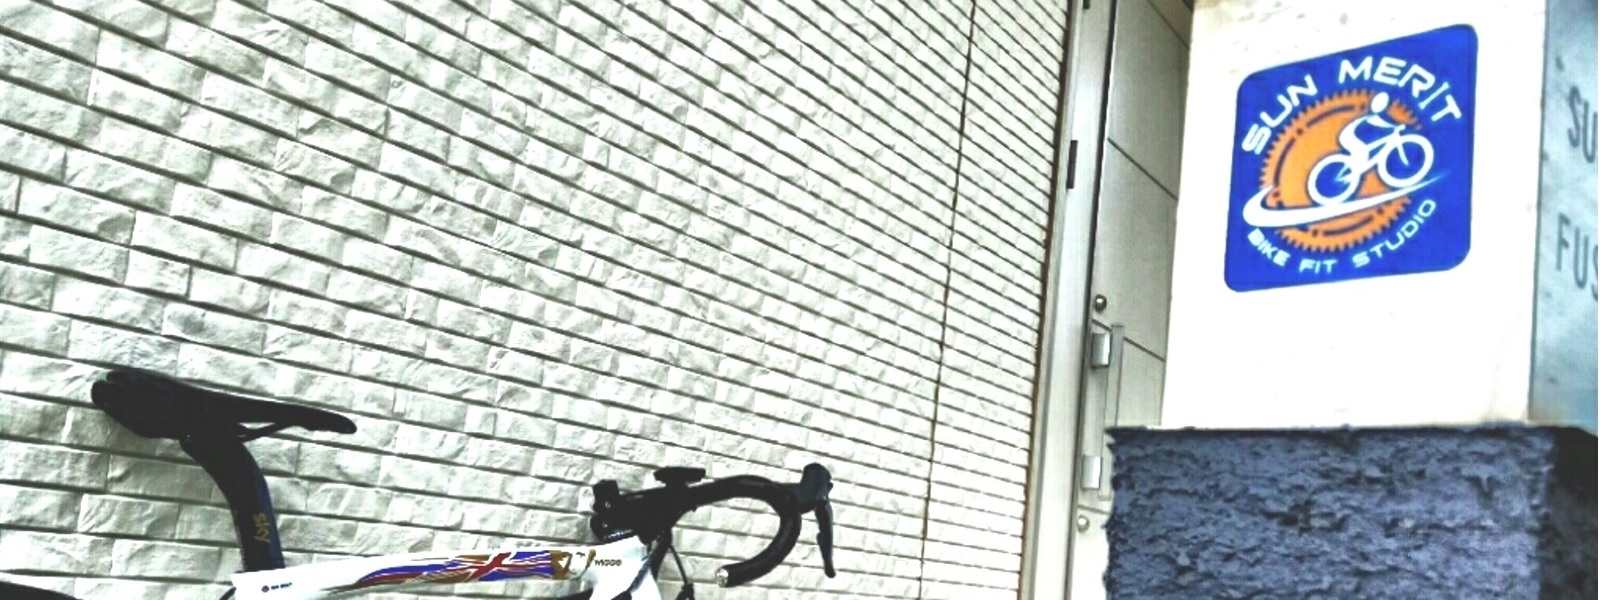 bike fitting service near me